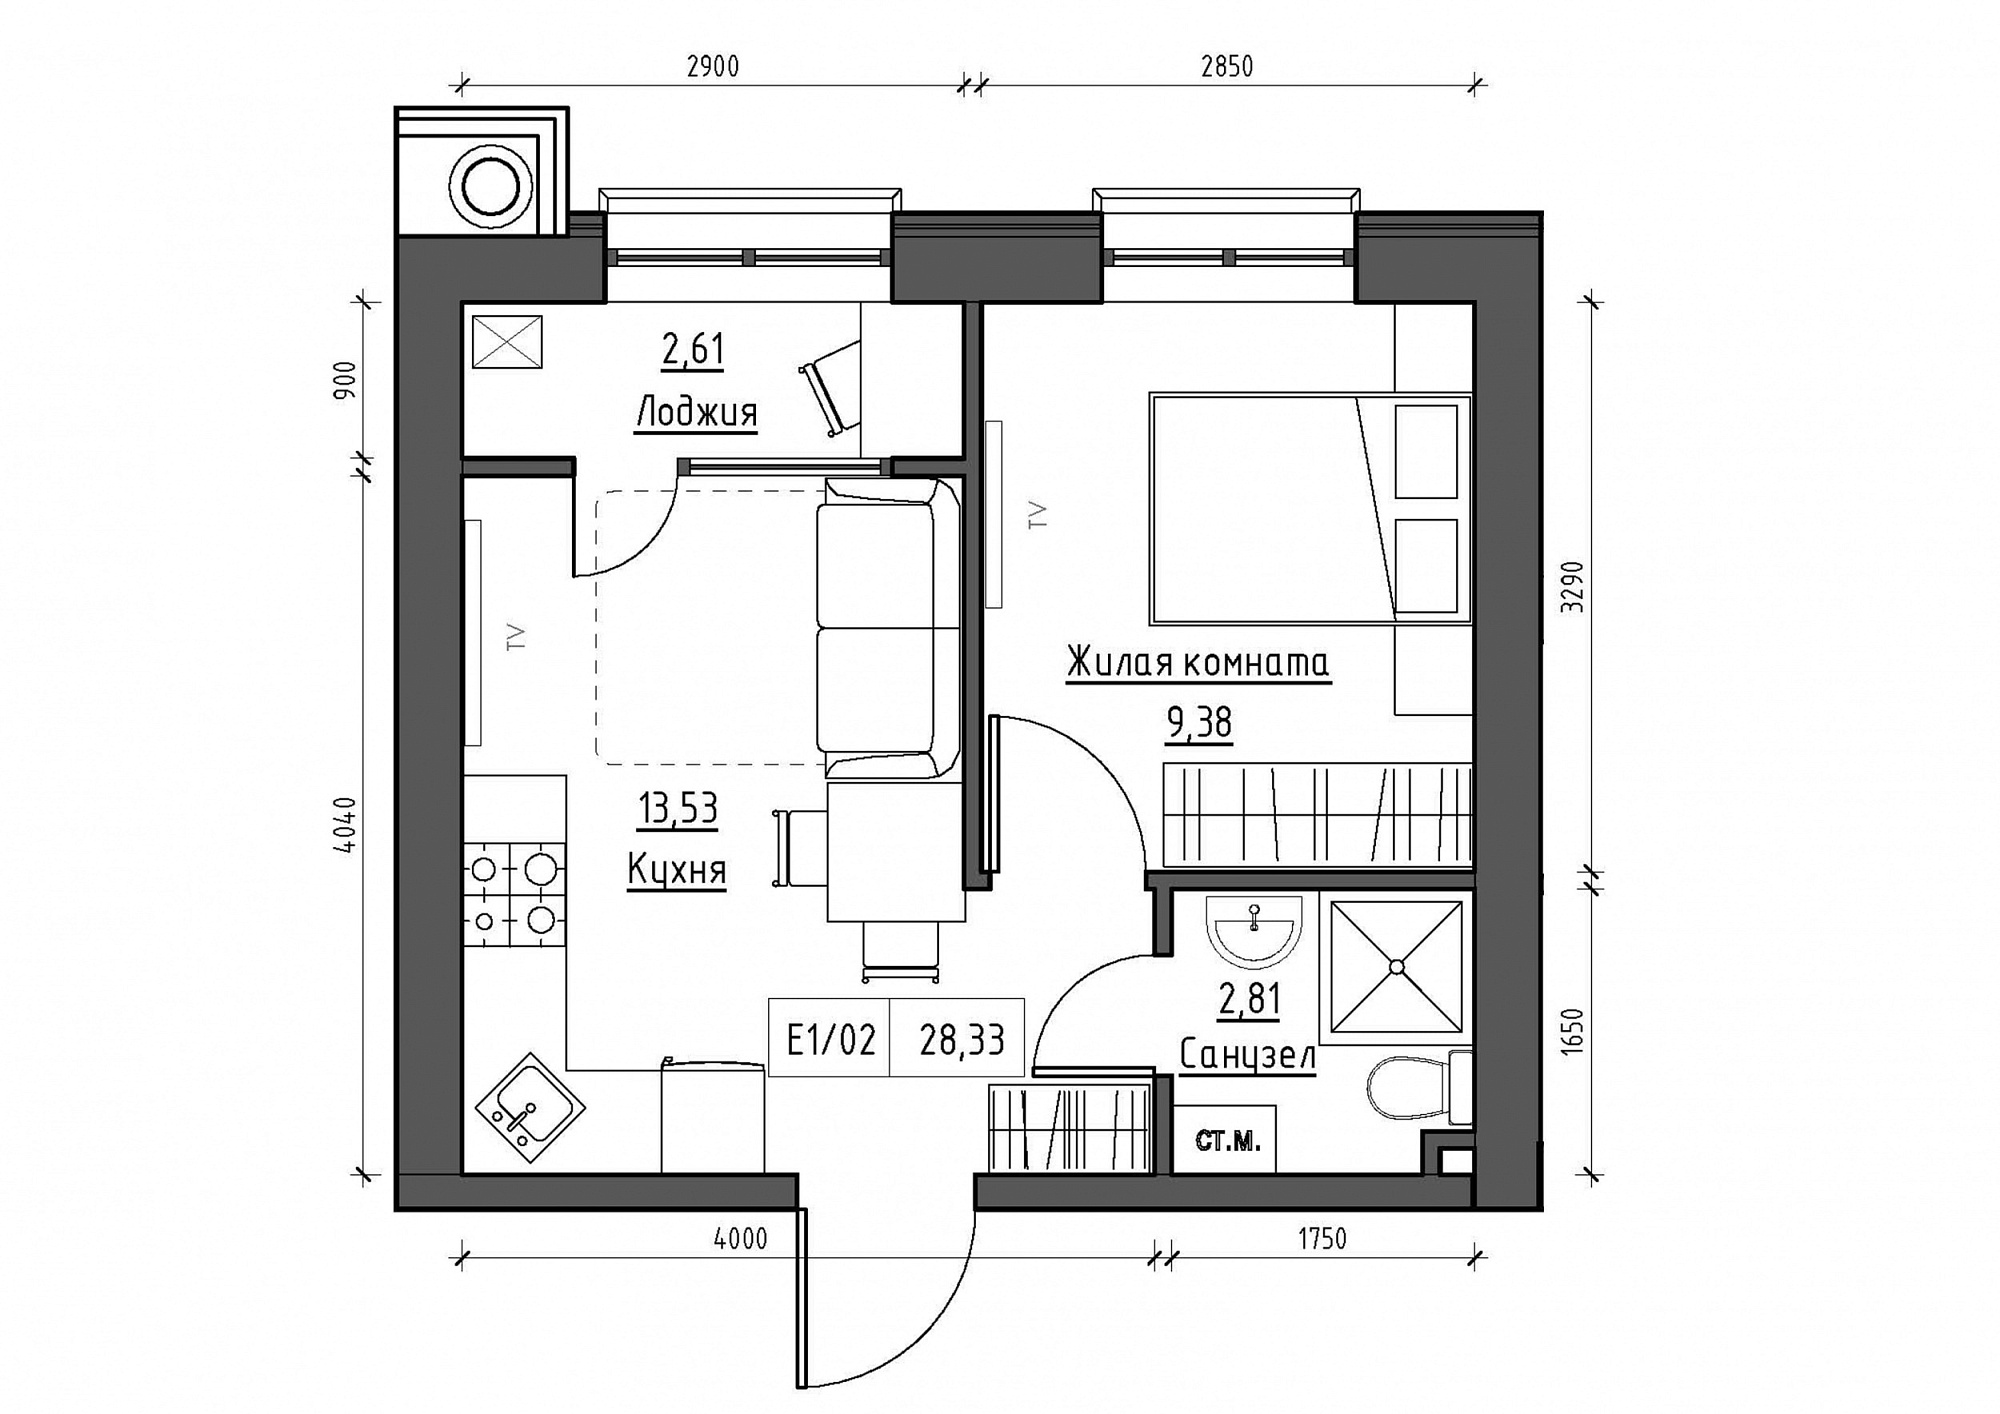 Planning 1-rm flats area 28.33m2, KS-011-05/0018.